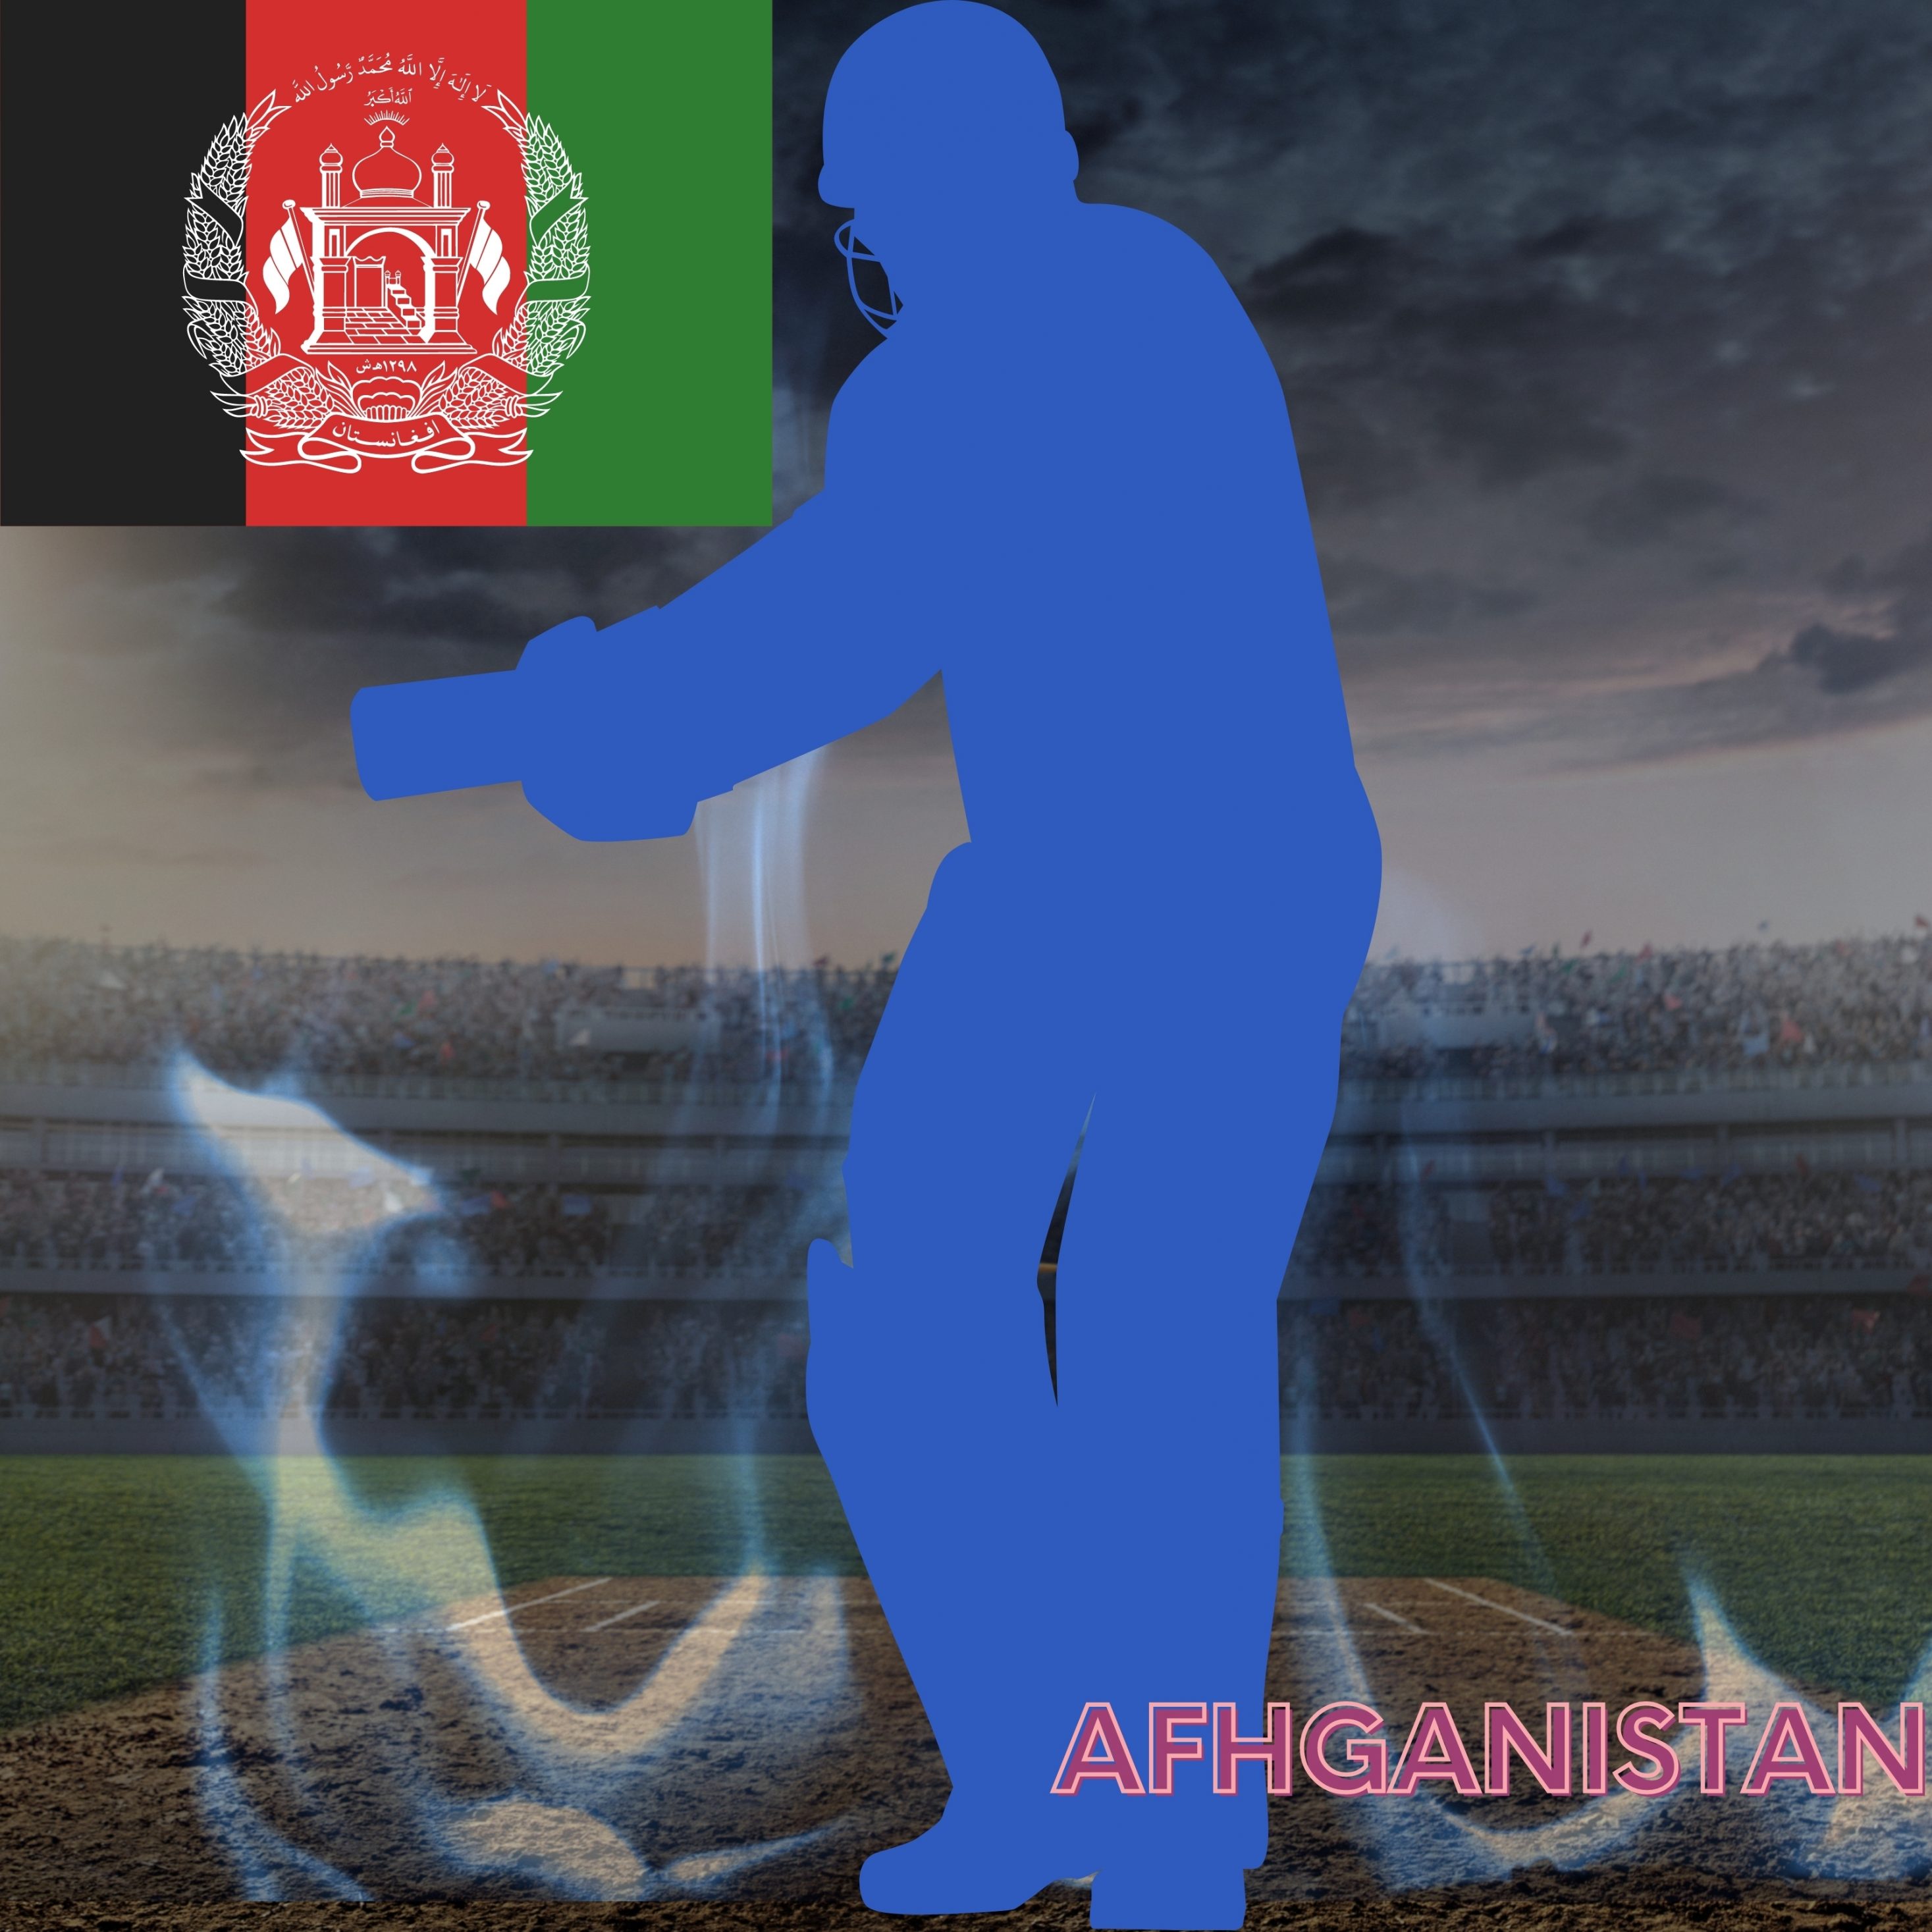 2934x2934 iOS iPad wallpaper 4k Afhganistan Cricket Stadium iPad Wallpaper 2934x2934 pixels resolution